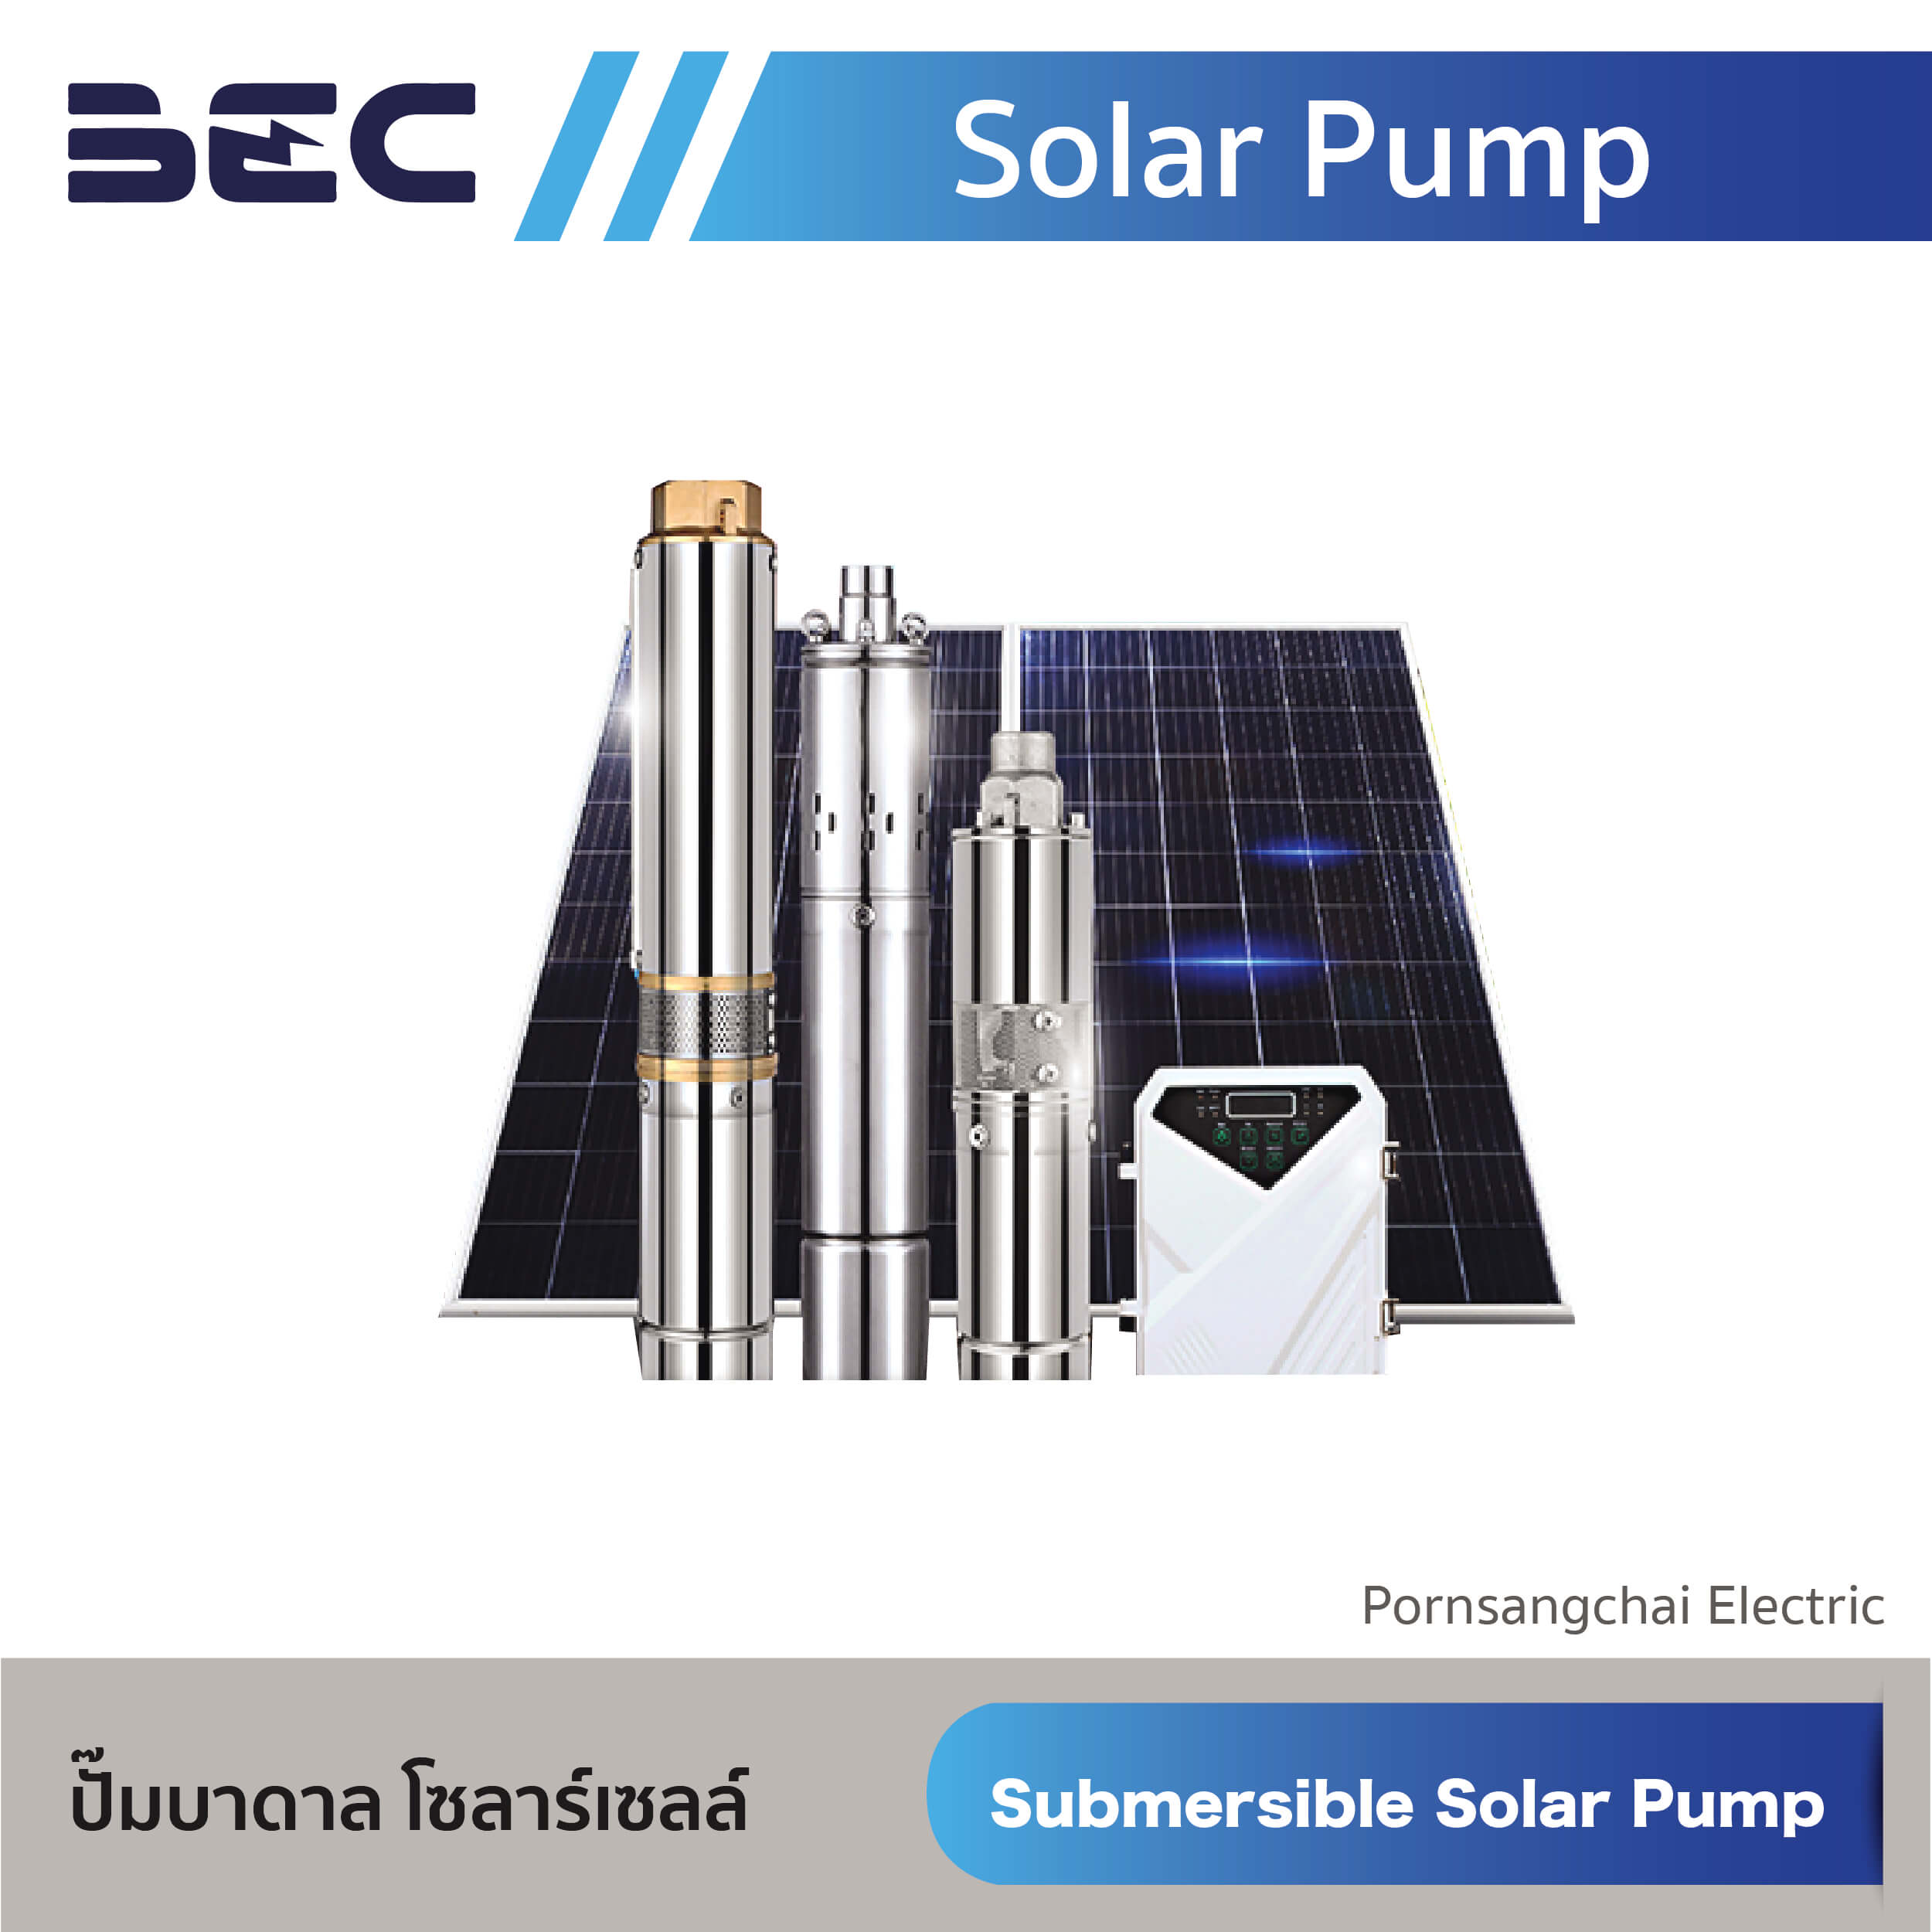 BEC Submersible Solar Pumps